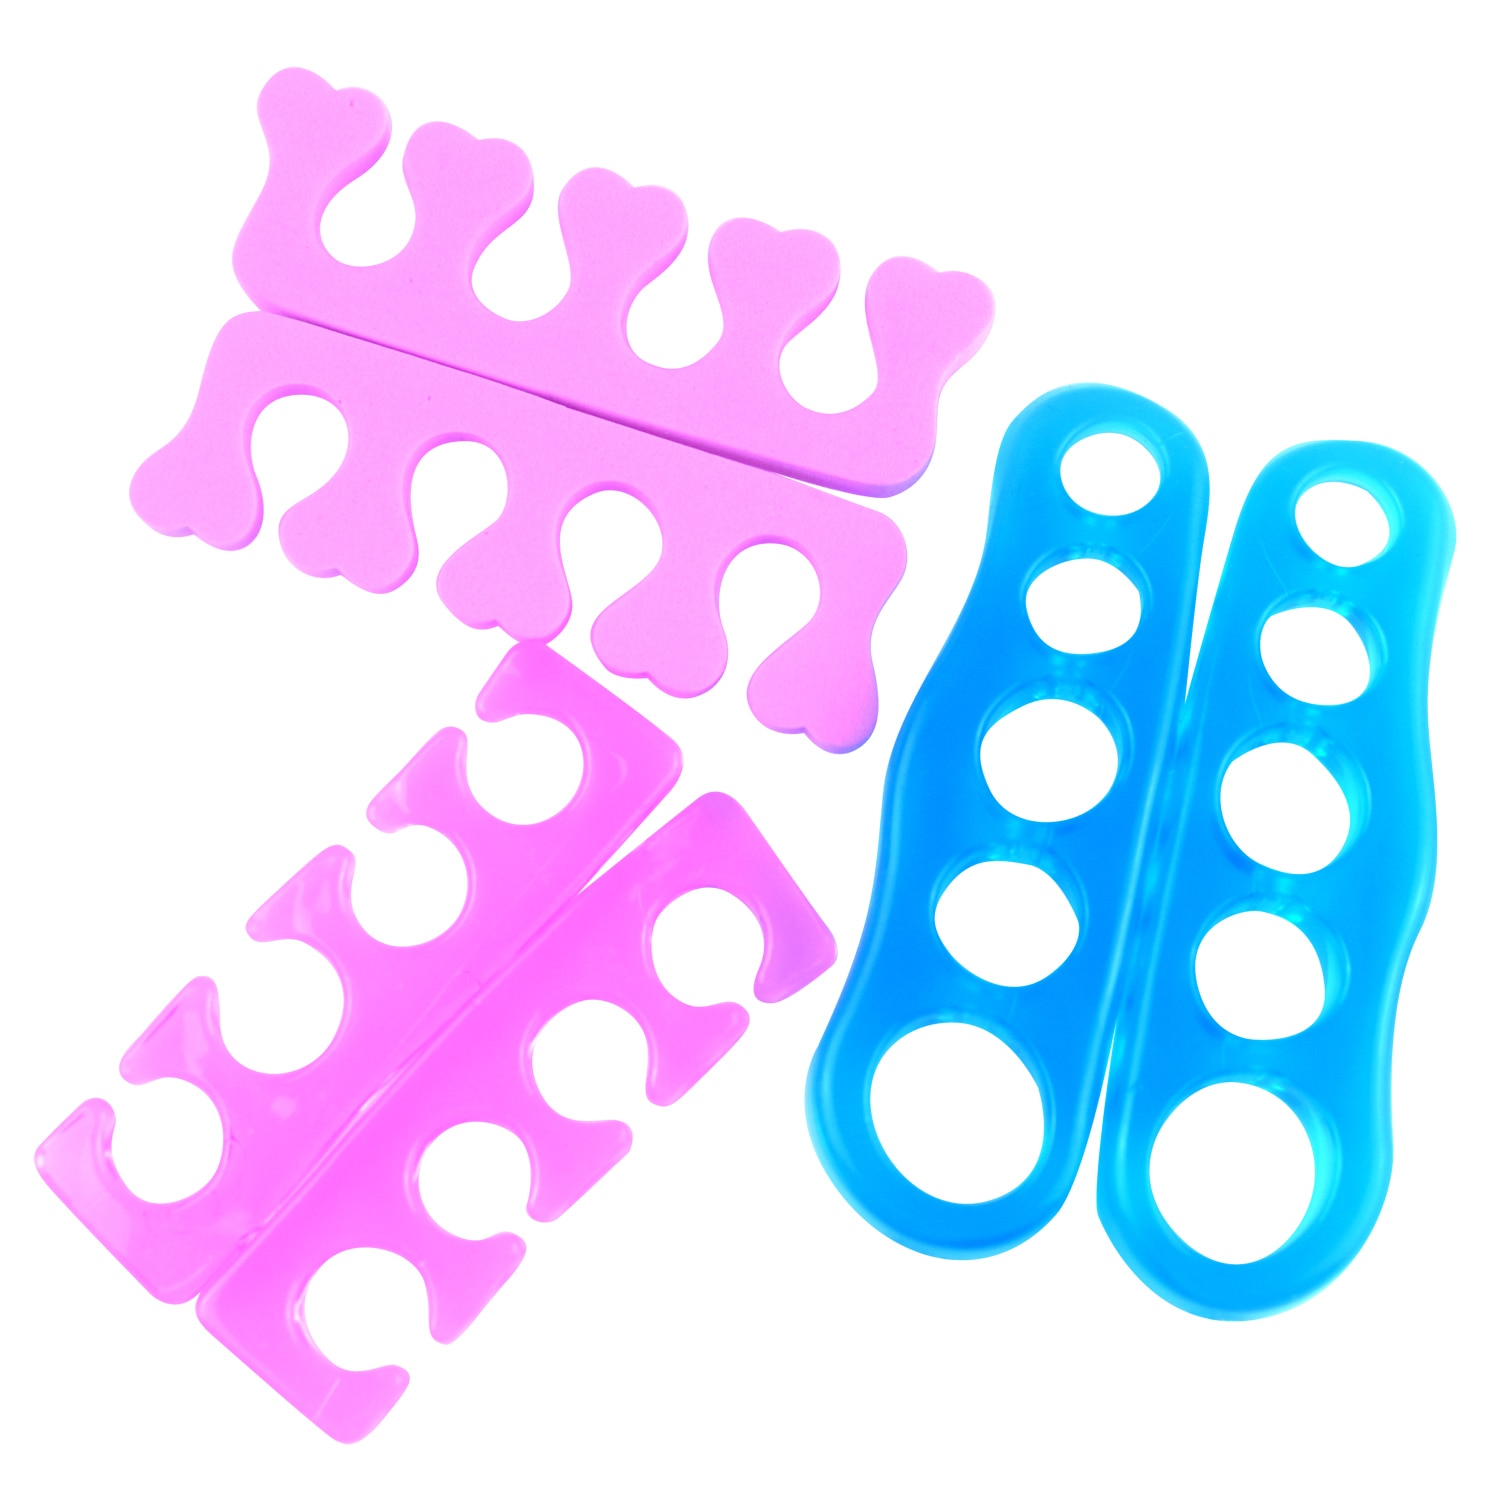 2 Stks/pak Silicone Soft Form Toe Separator / Finger Spacer Voor Manicure Pedicure Nail Tool Flexibele Soft Silica Willekeurige Kleur